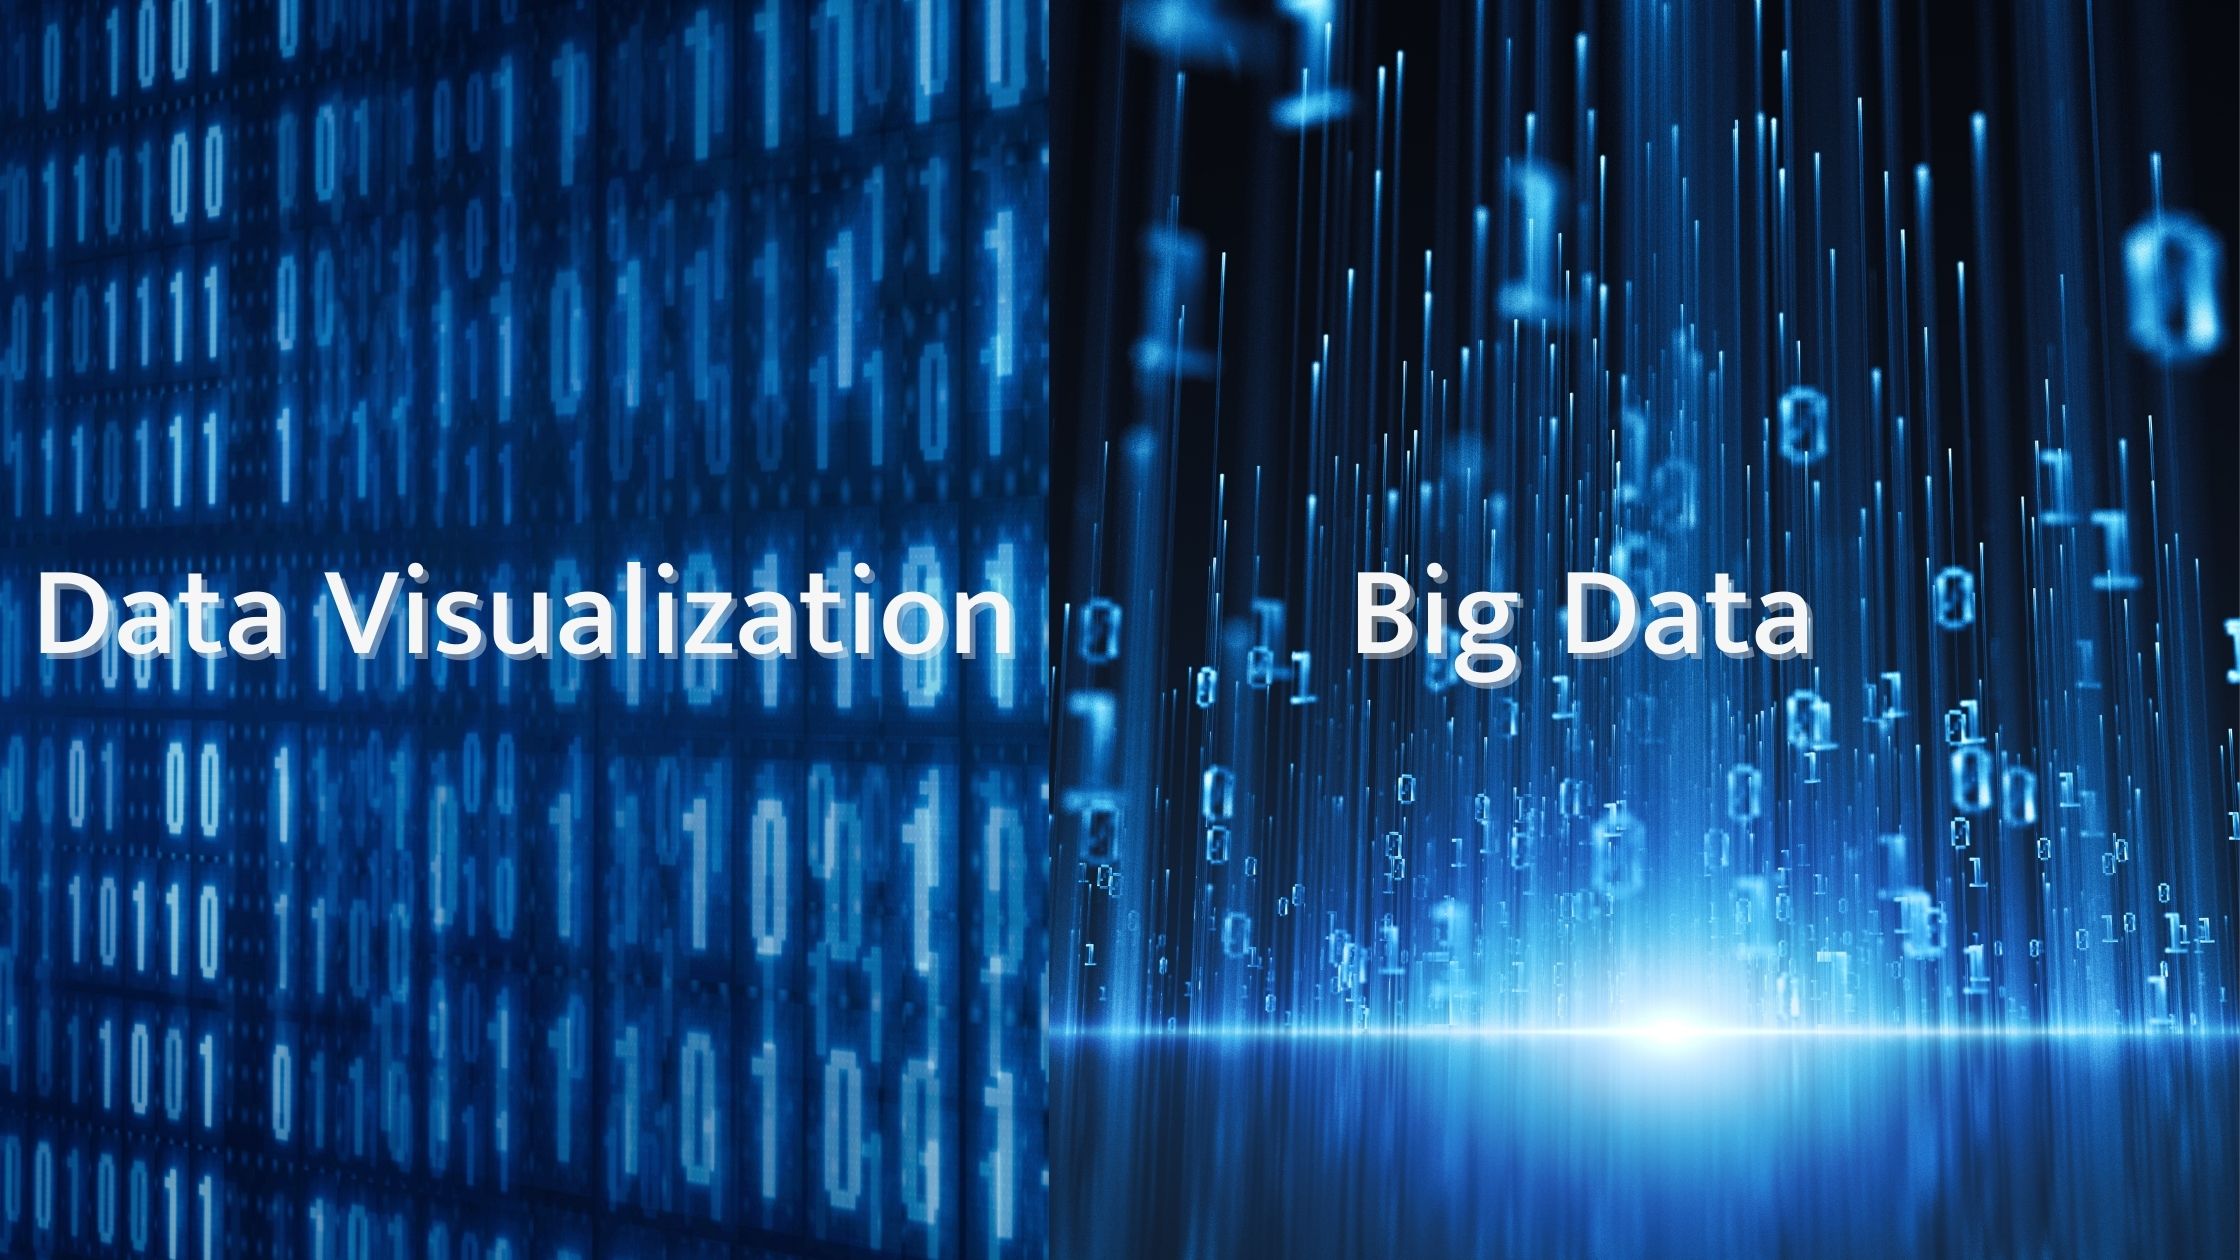 Data Visualization and Big Data